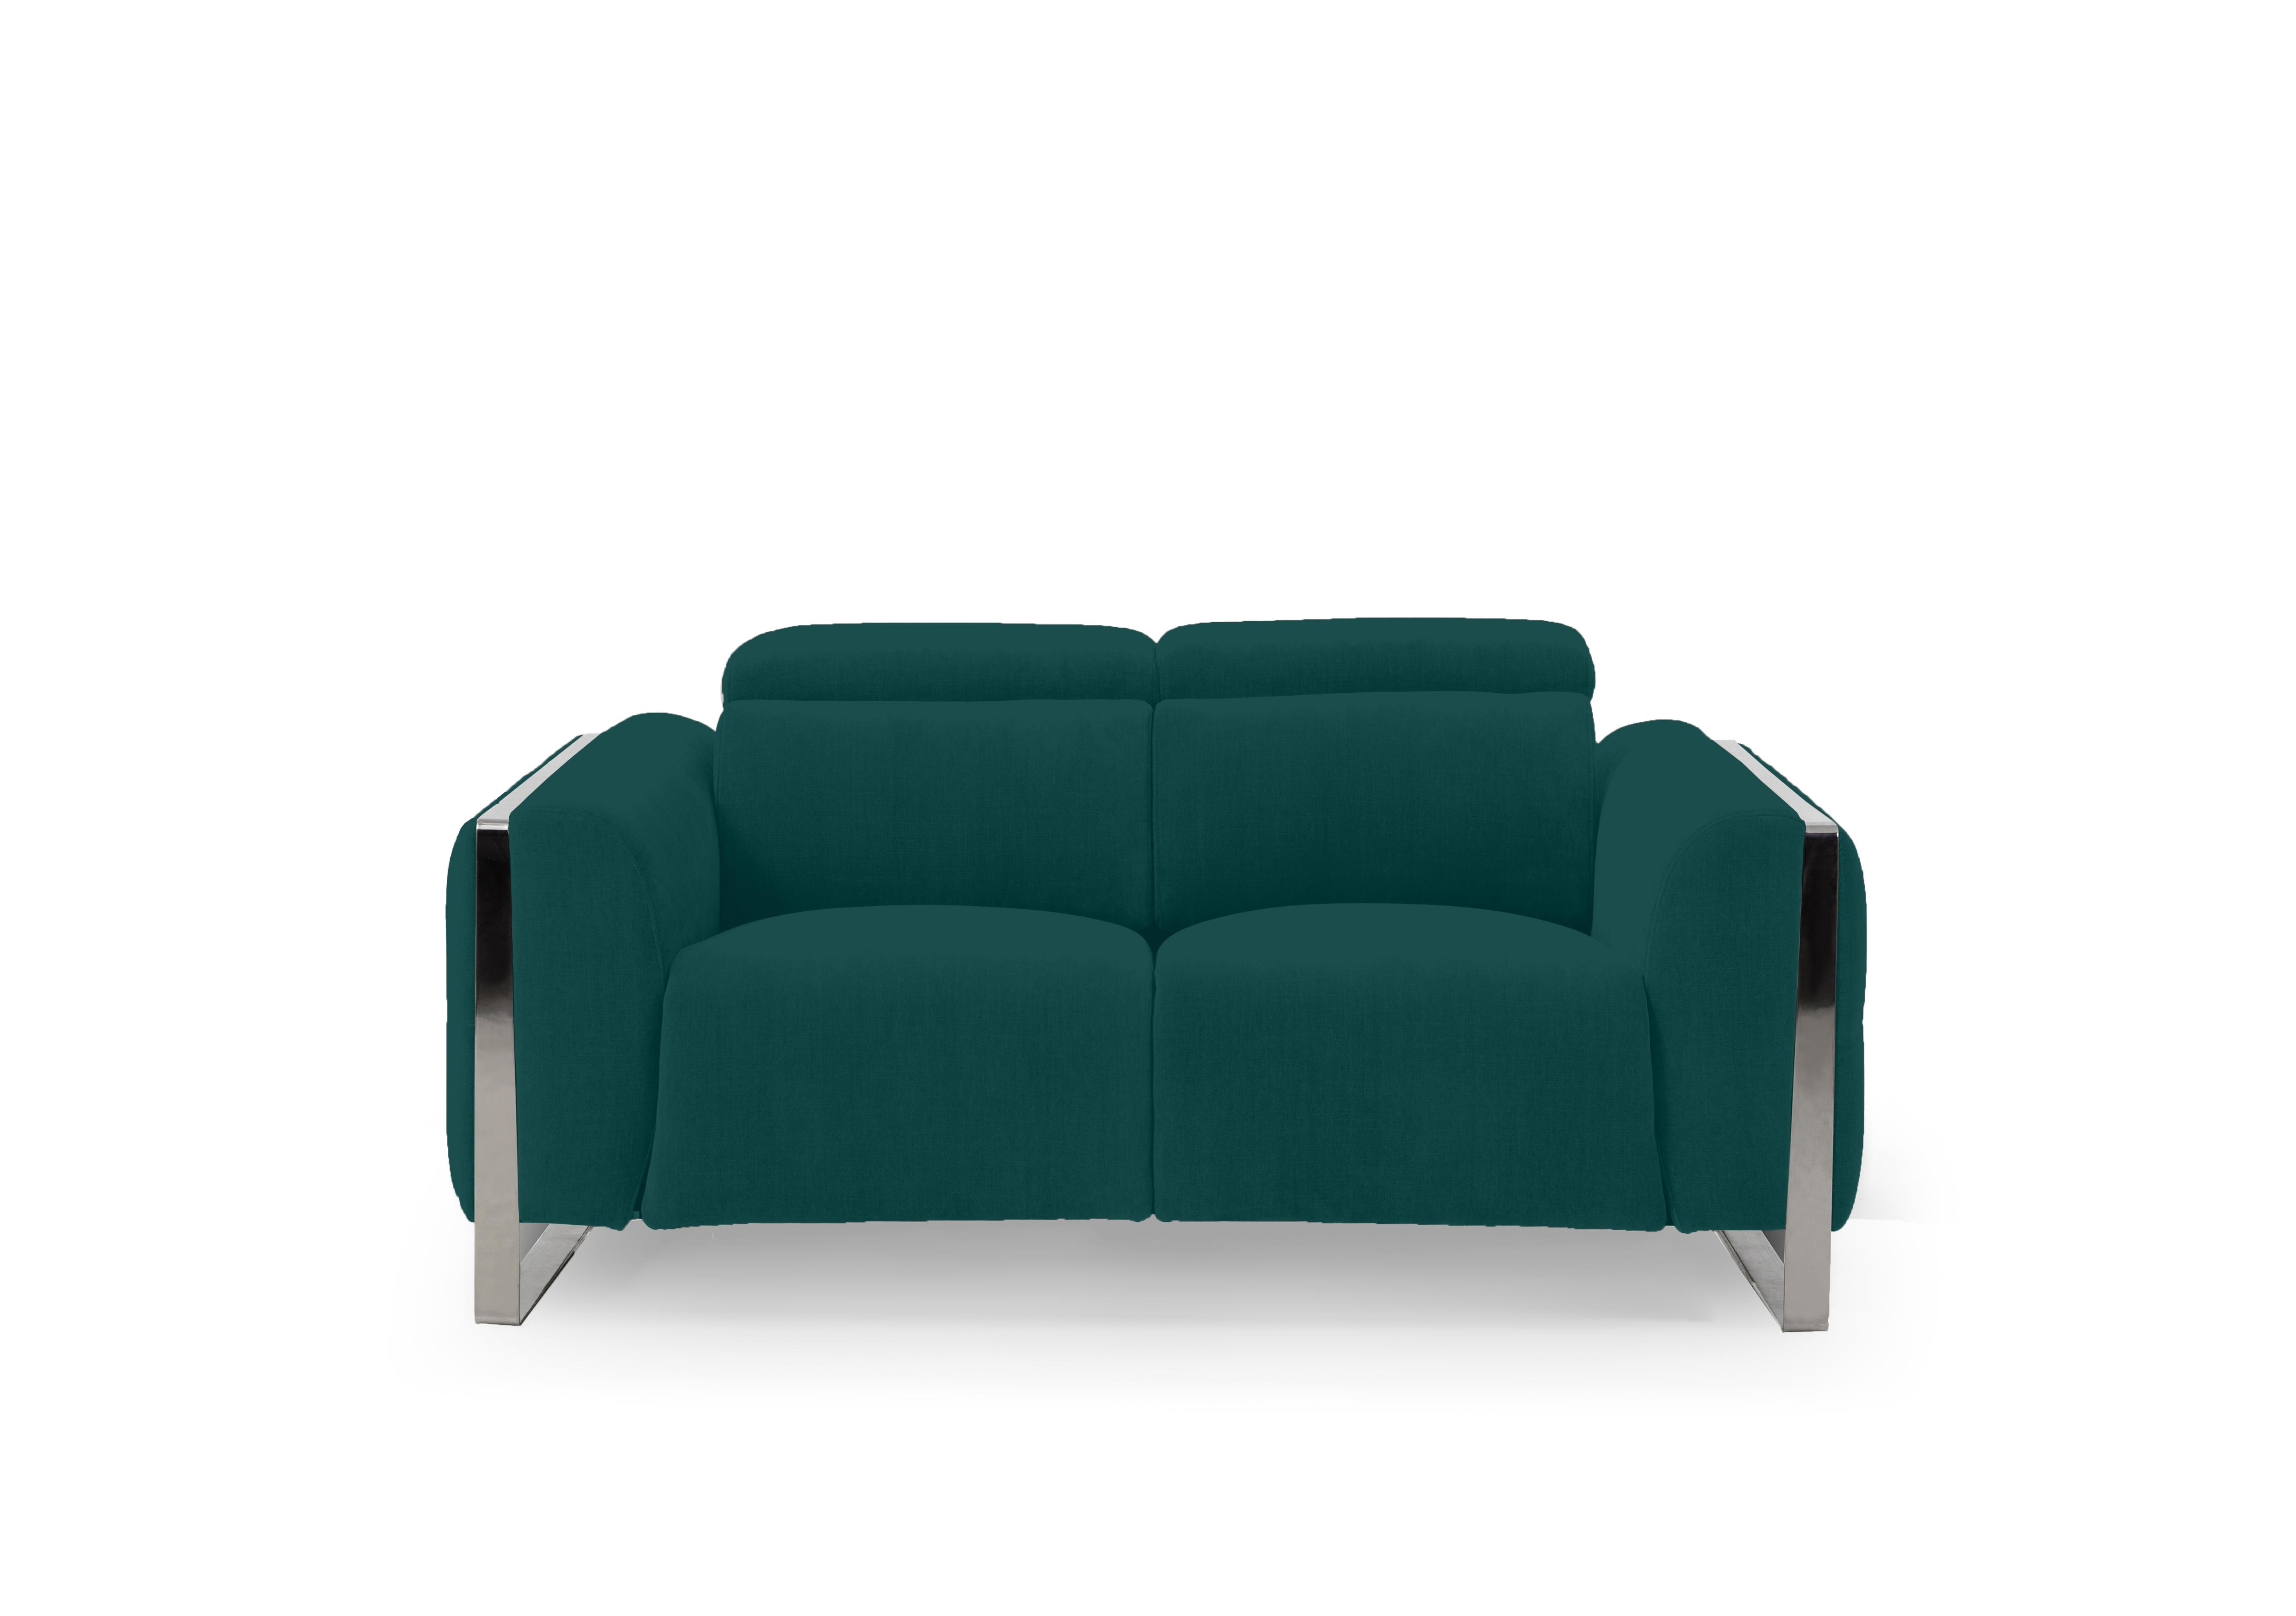 Gisella Fabric 2 Seater Sofa in Opulence Teal 51003 on Furniture Village